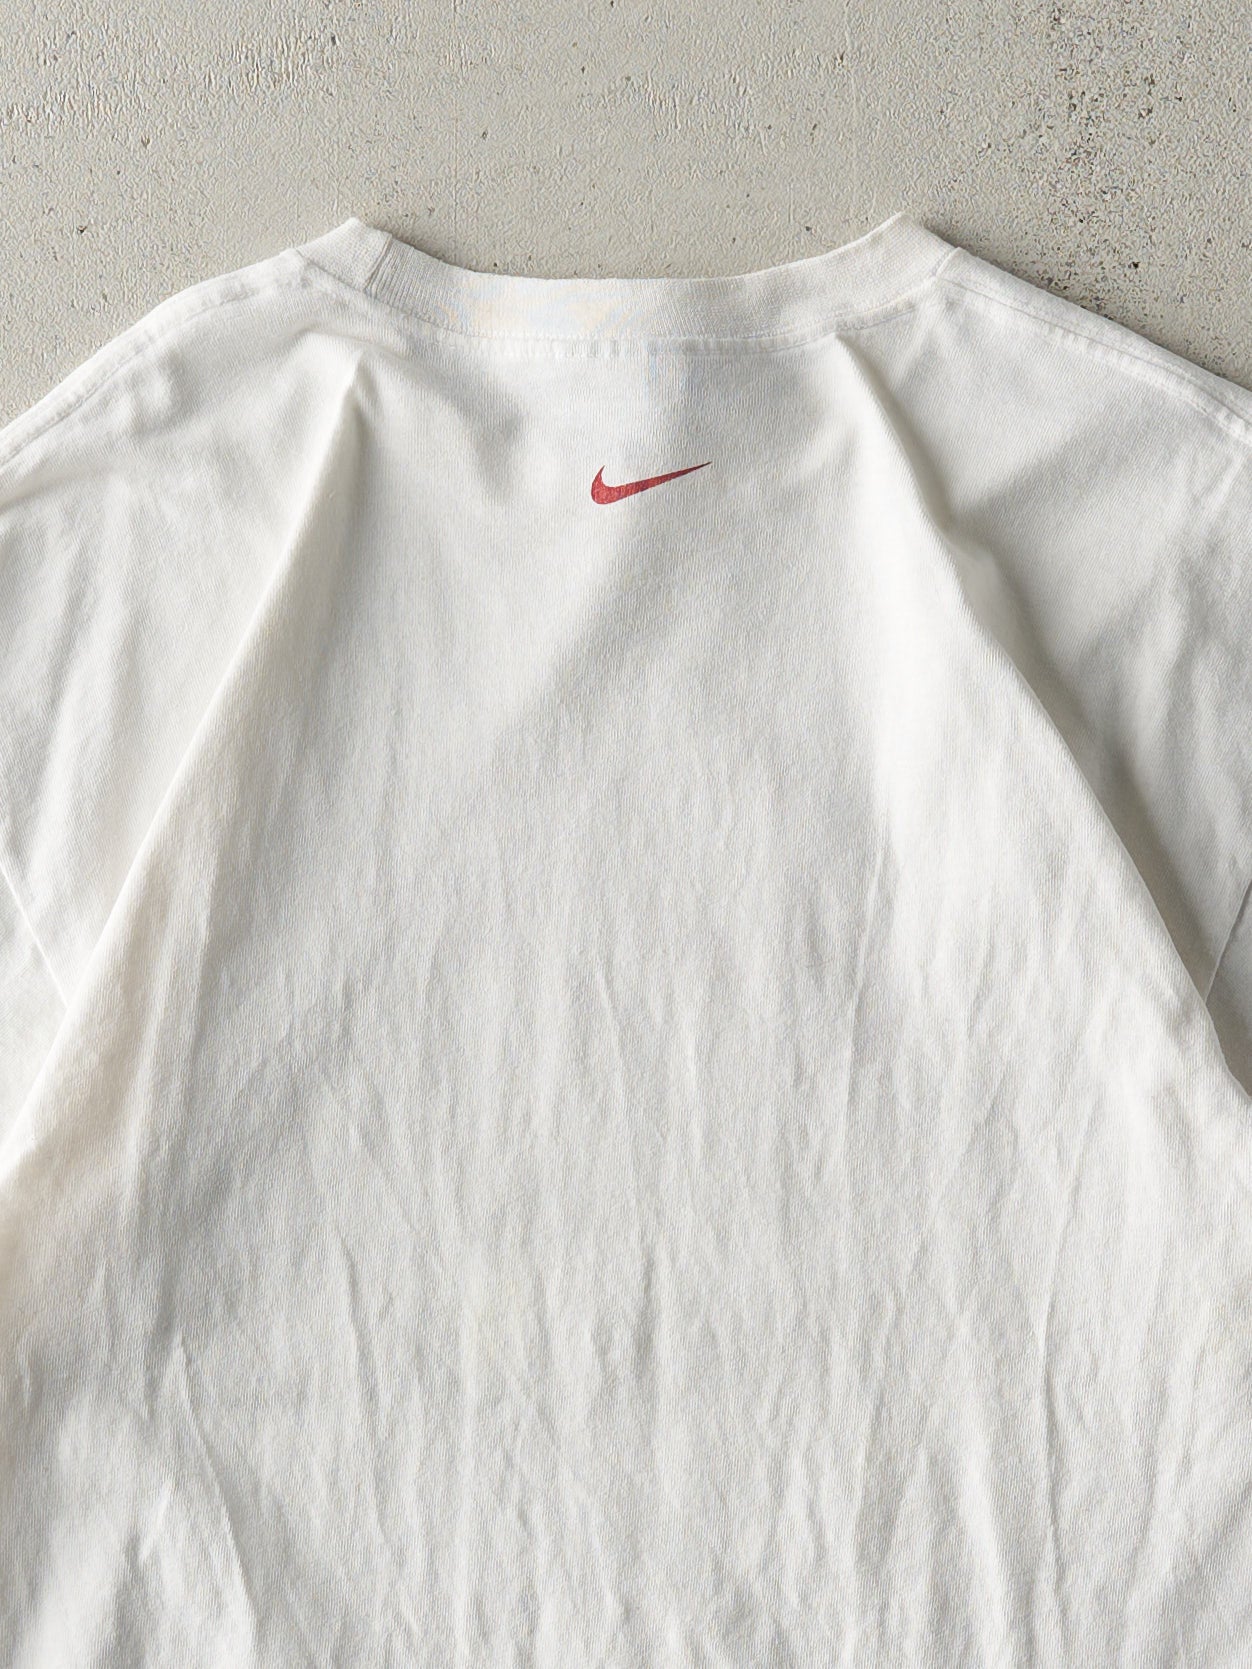 Vintage Y2K White & Red Nike Logo Tee (M)